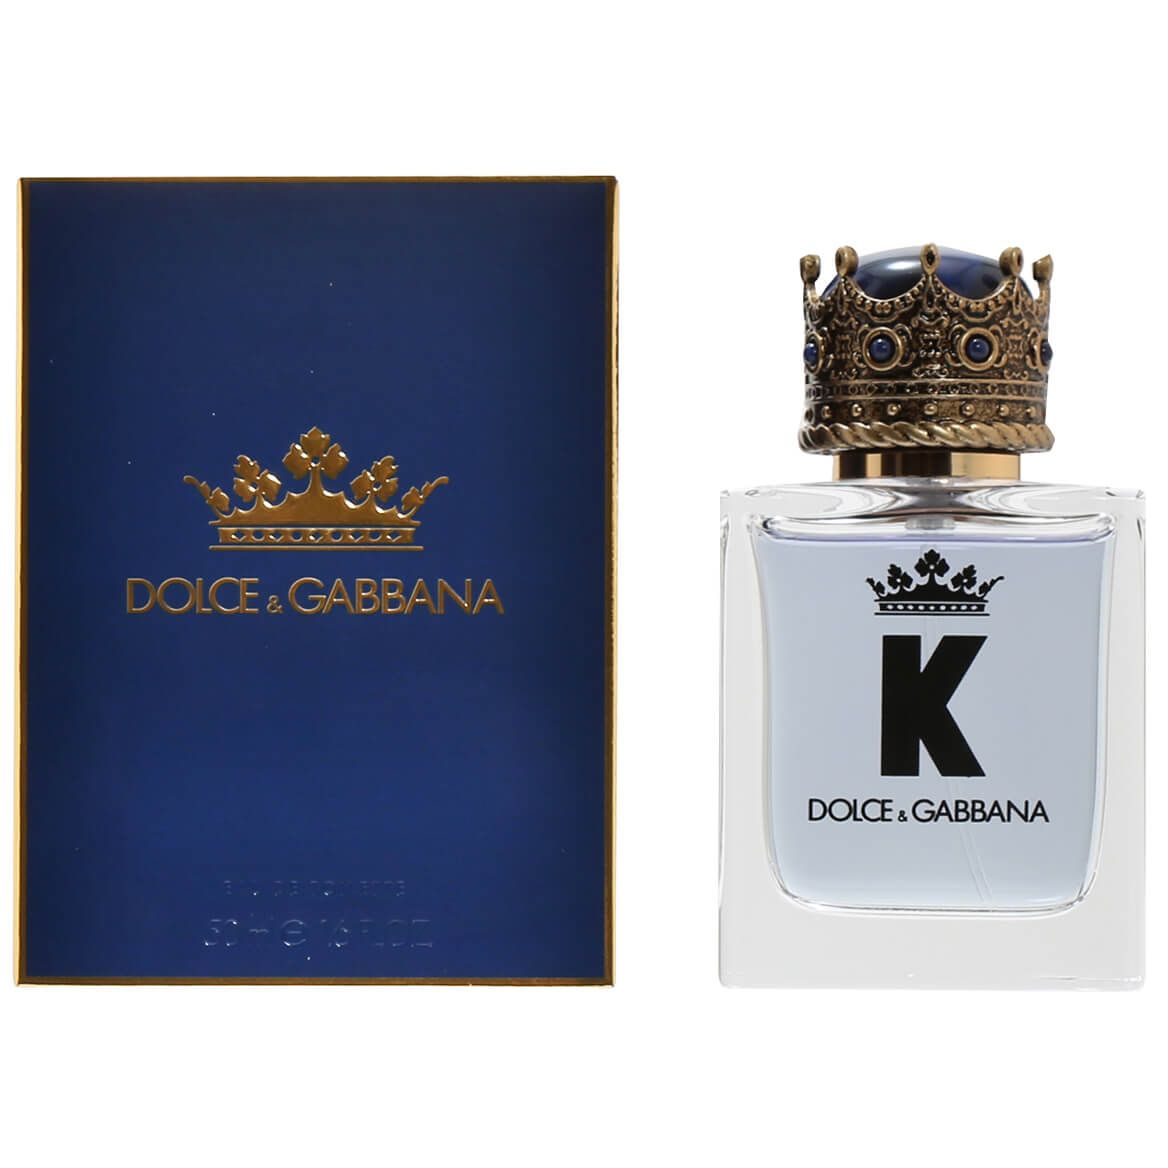 K by Dolce & Gabbana for Men EDT, 1.7 fl. oz. + '-' + 377271